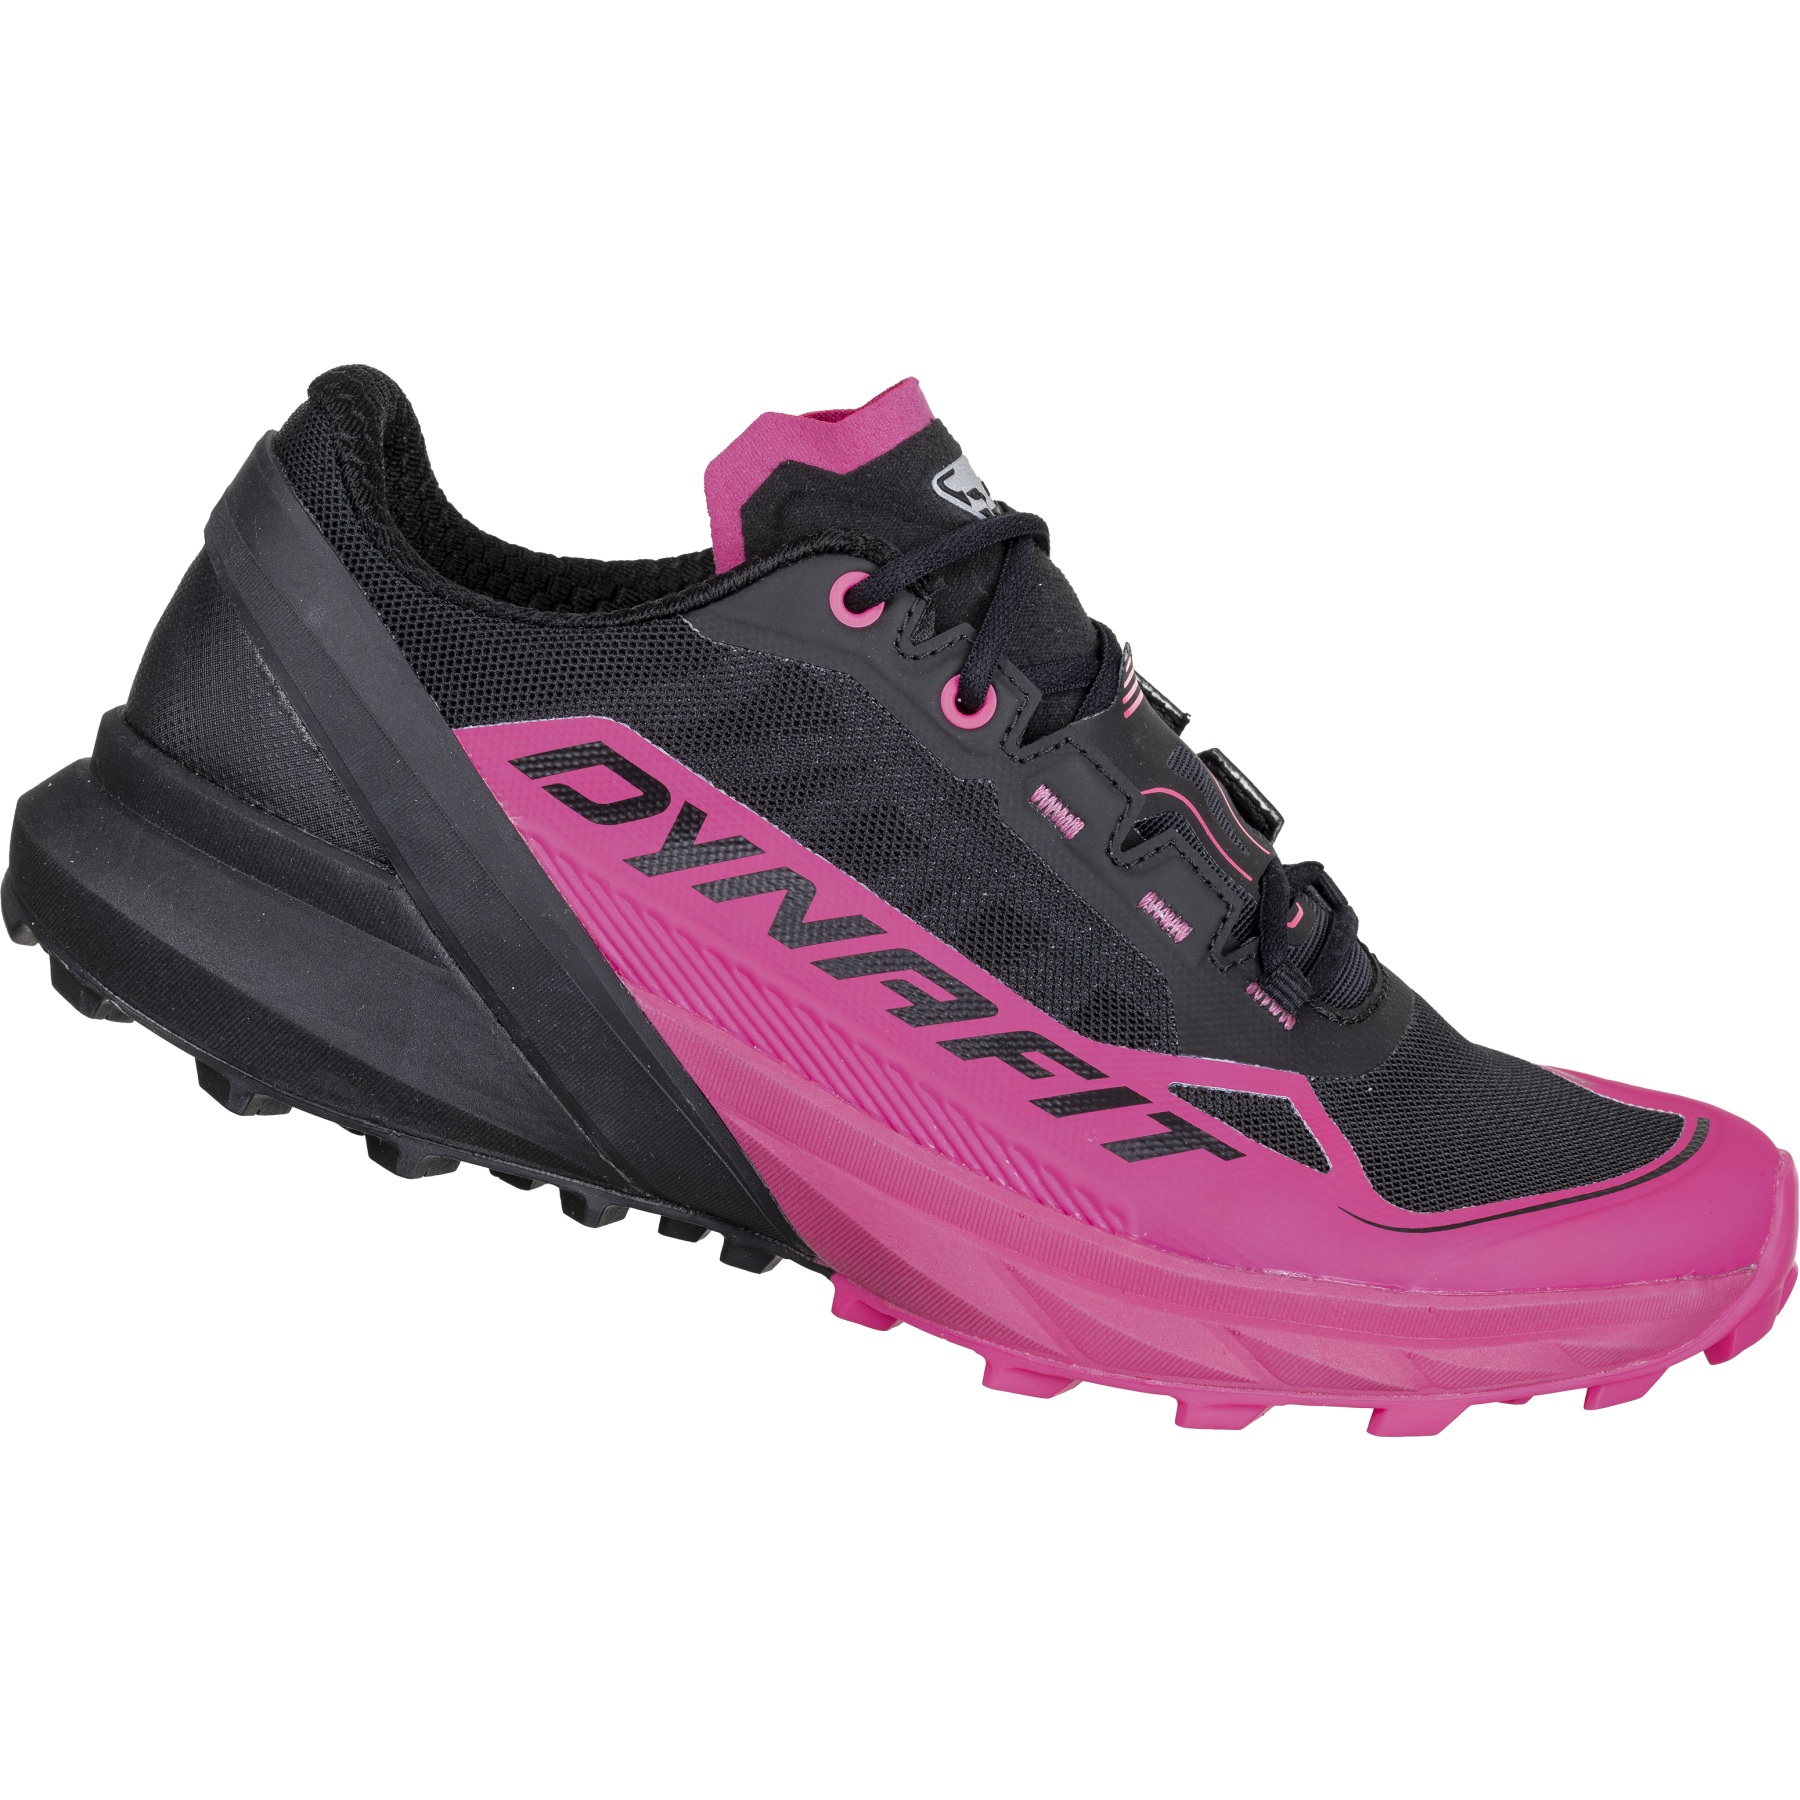 Productfoto van Dynafit Ultra 50 Hardloopschoenen Dames - Pink Glo Black Out